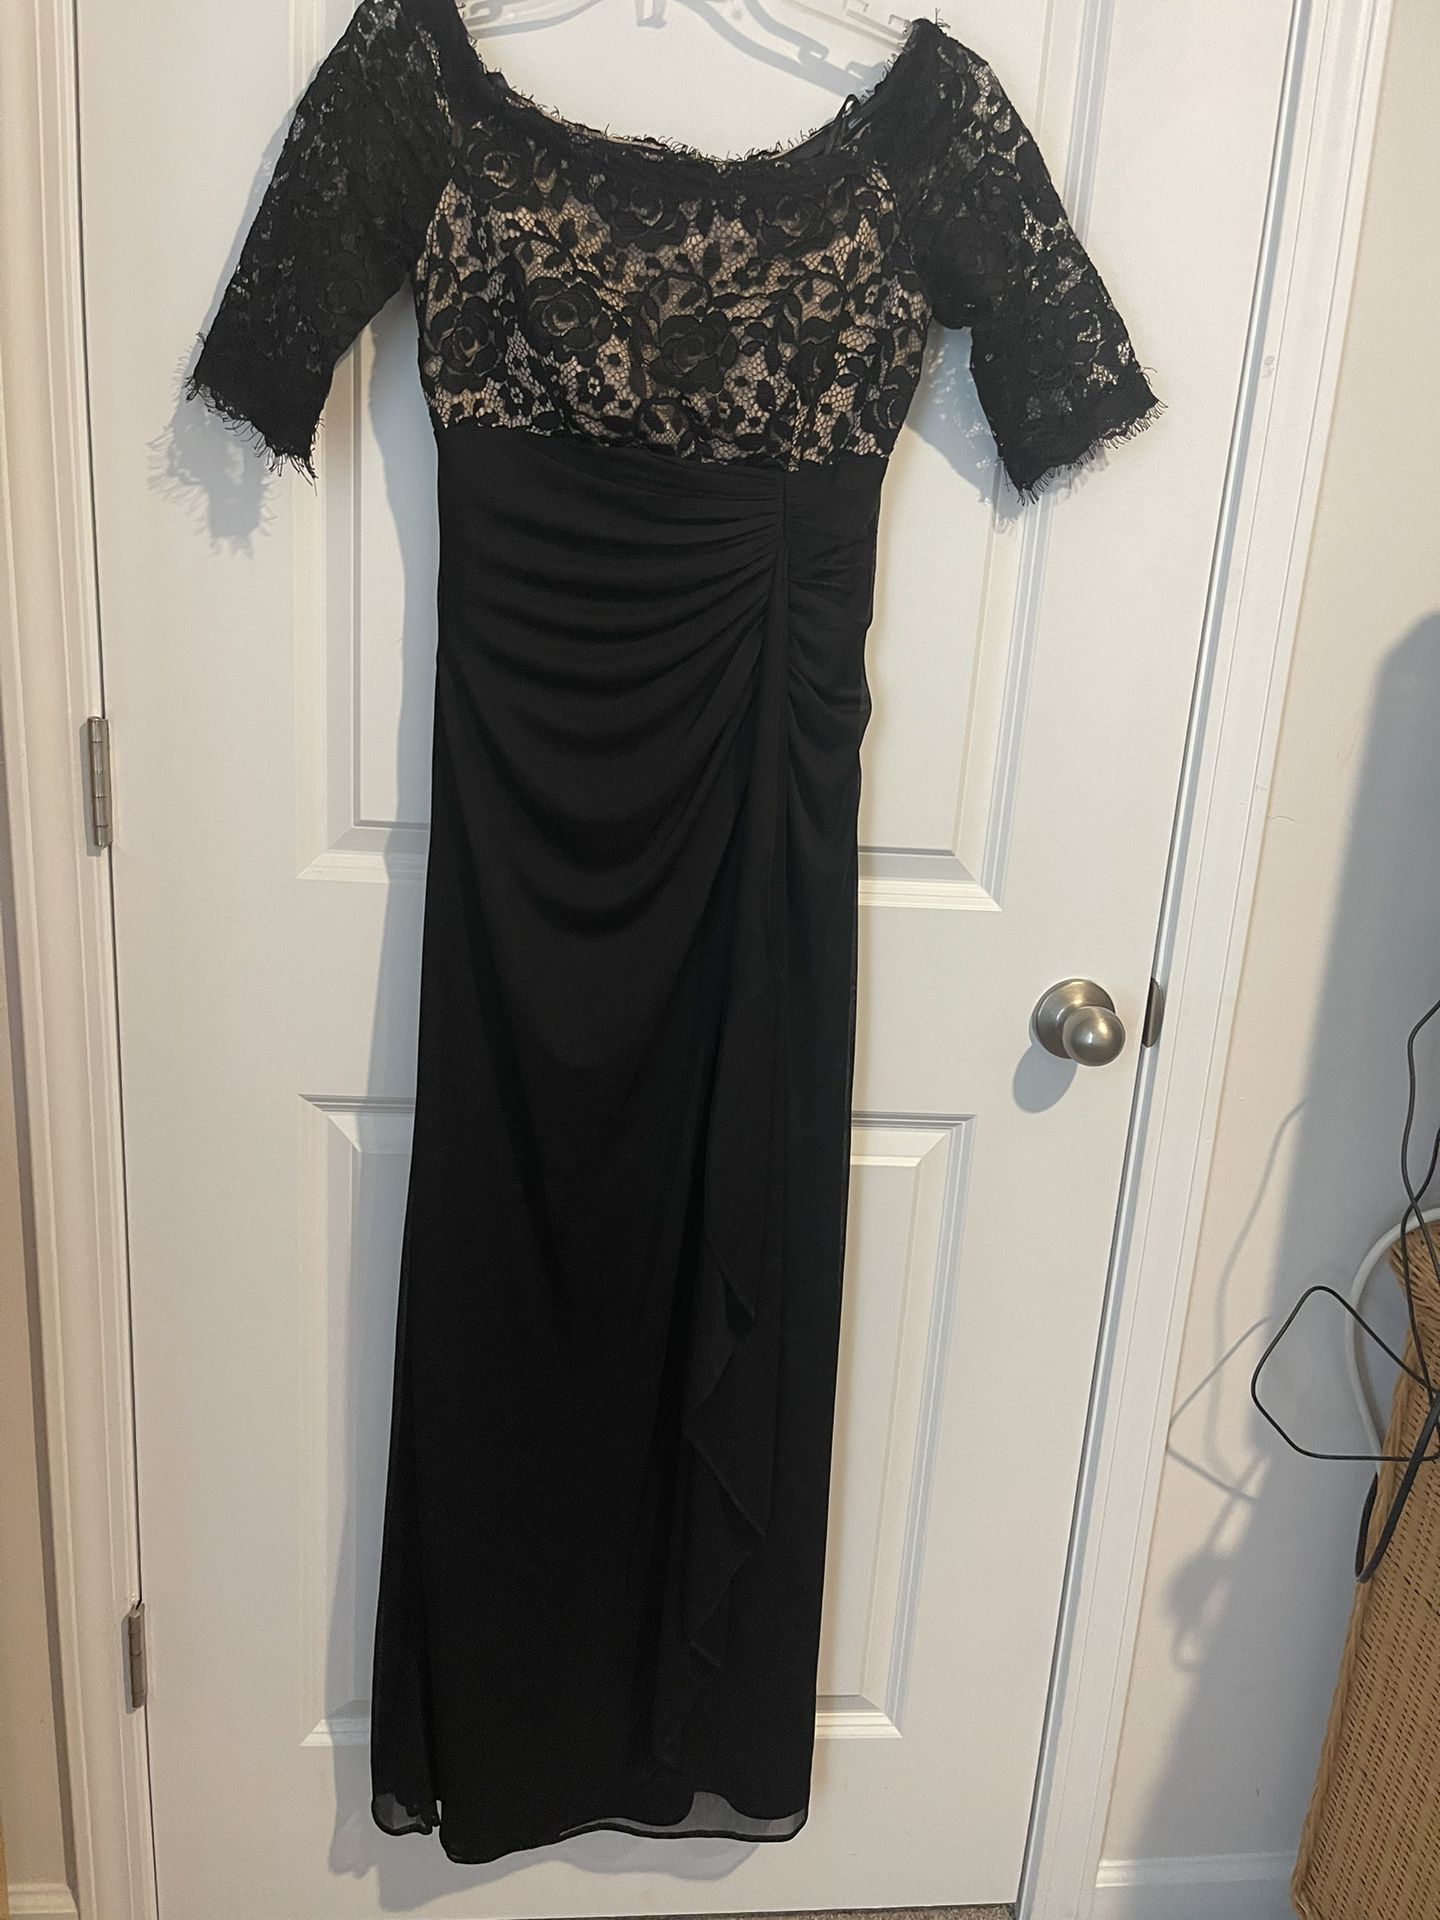 B&A Betsy&Adam Size 4 Black Maxi Dress.  Fully Lined